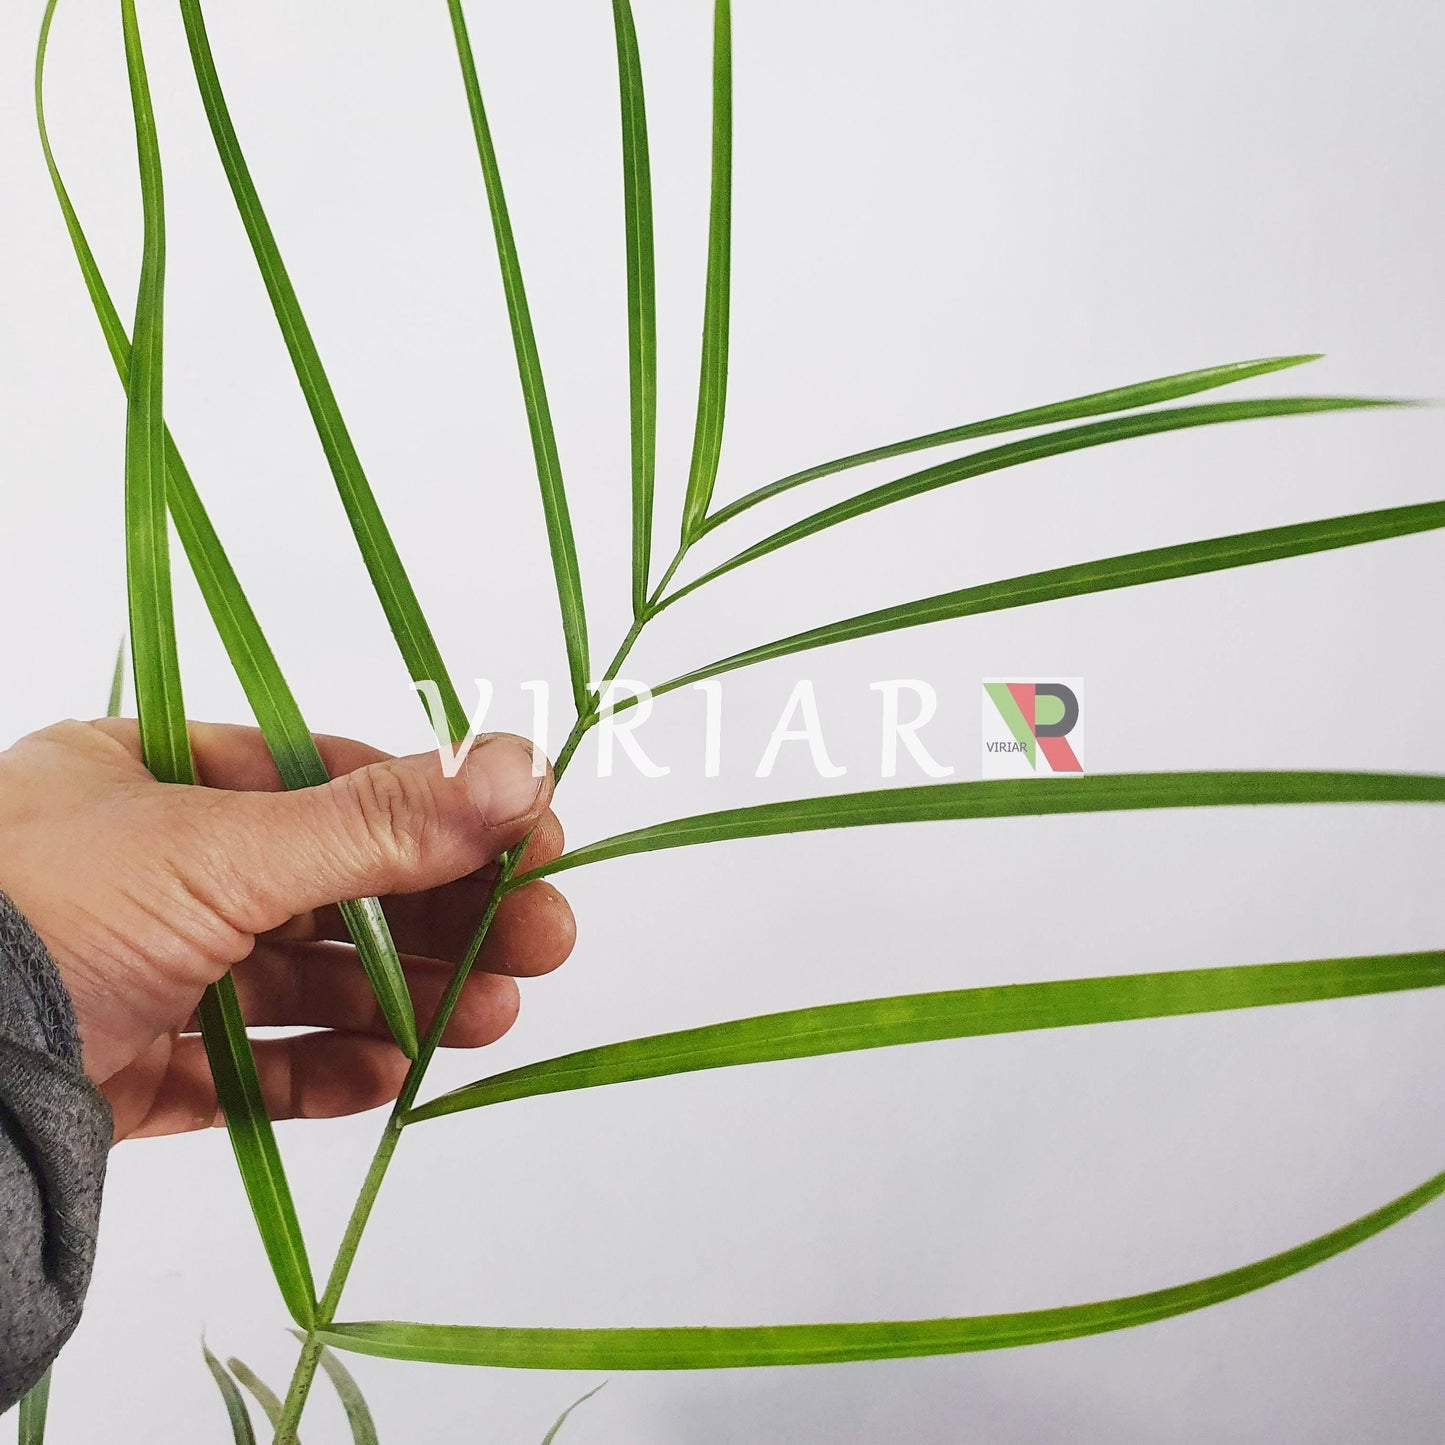 Dypsis decaryi - Dreieckspalme - 20-20cm Plant-Live Starter